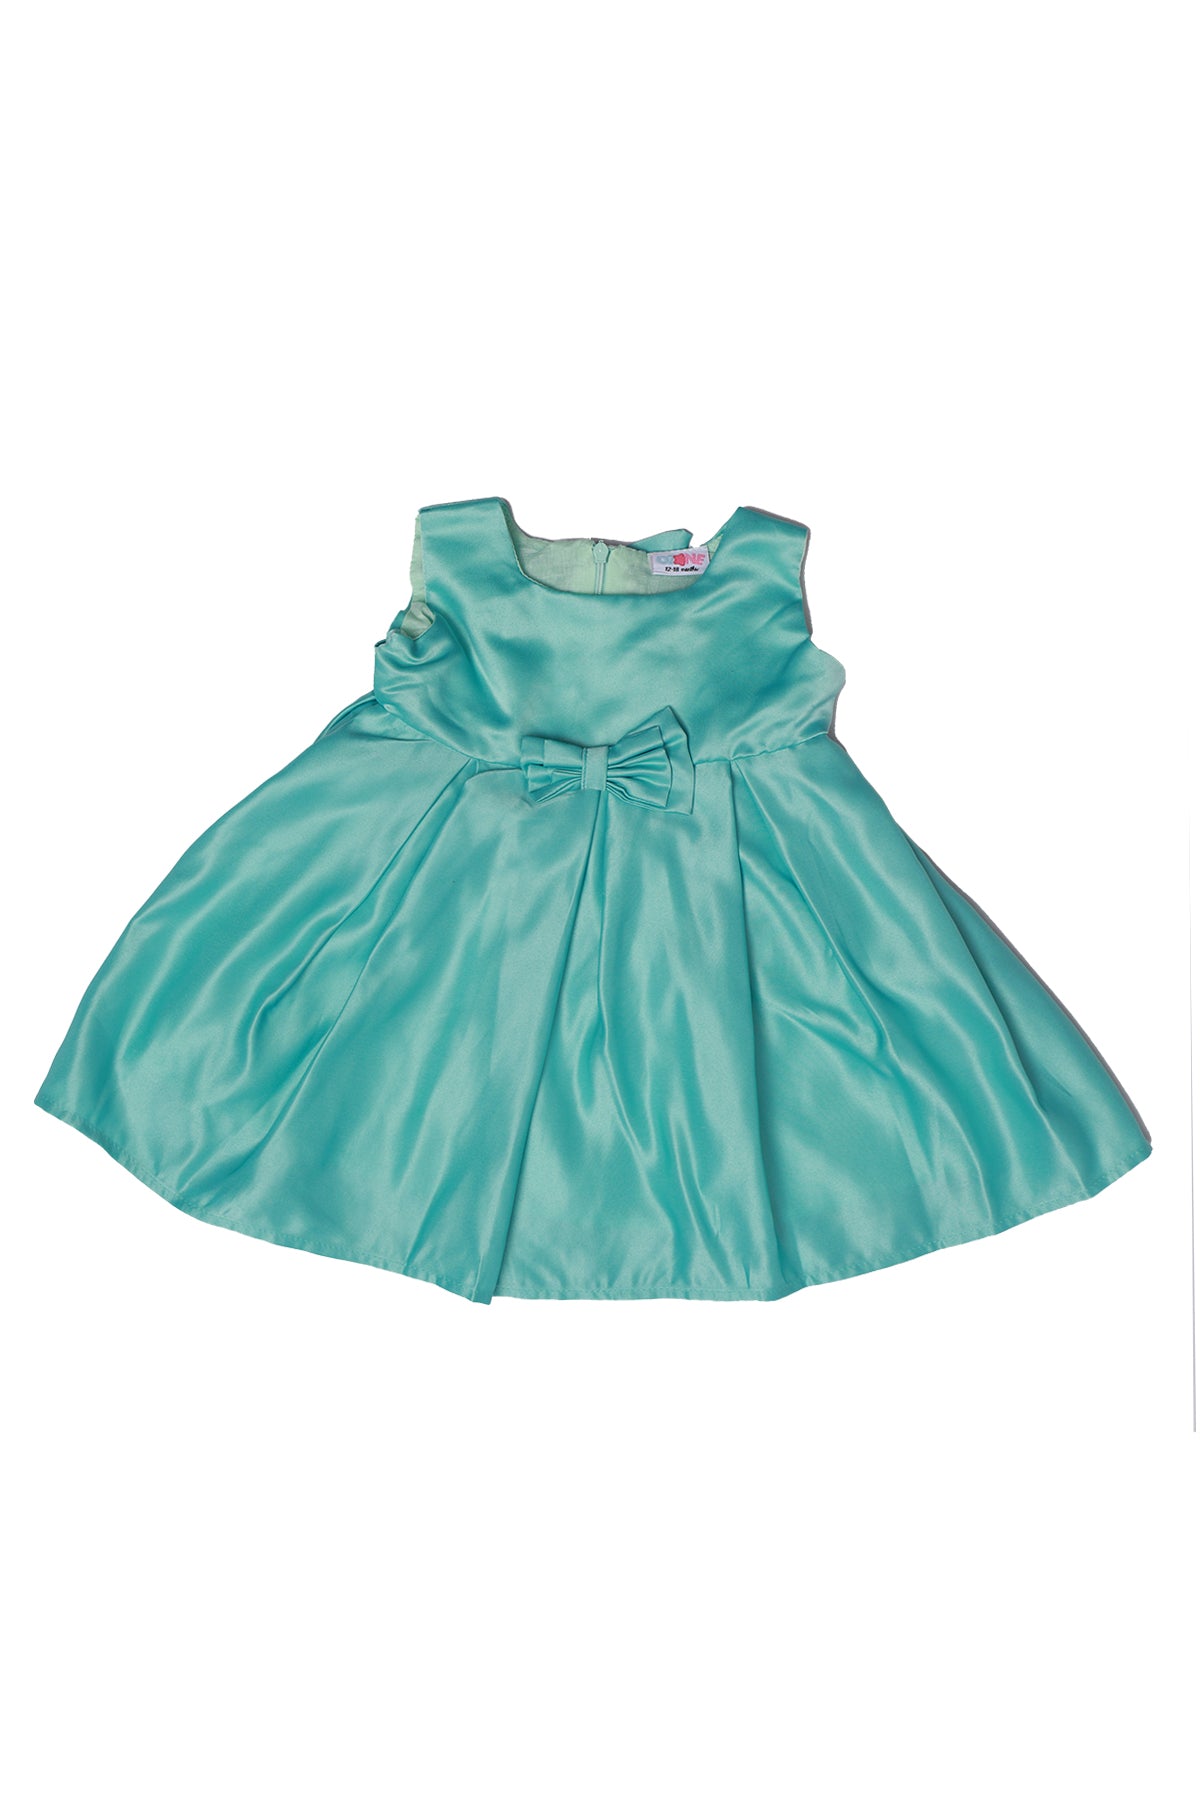 Ozone Baby Girls Sleeve Less Party Dress